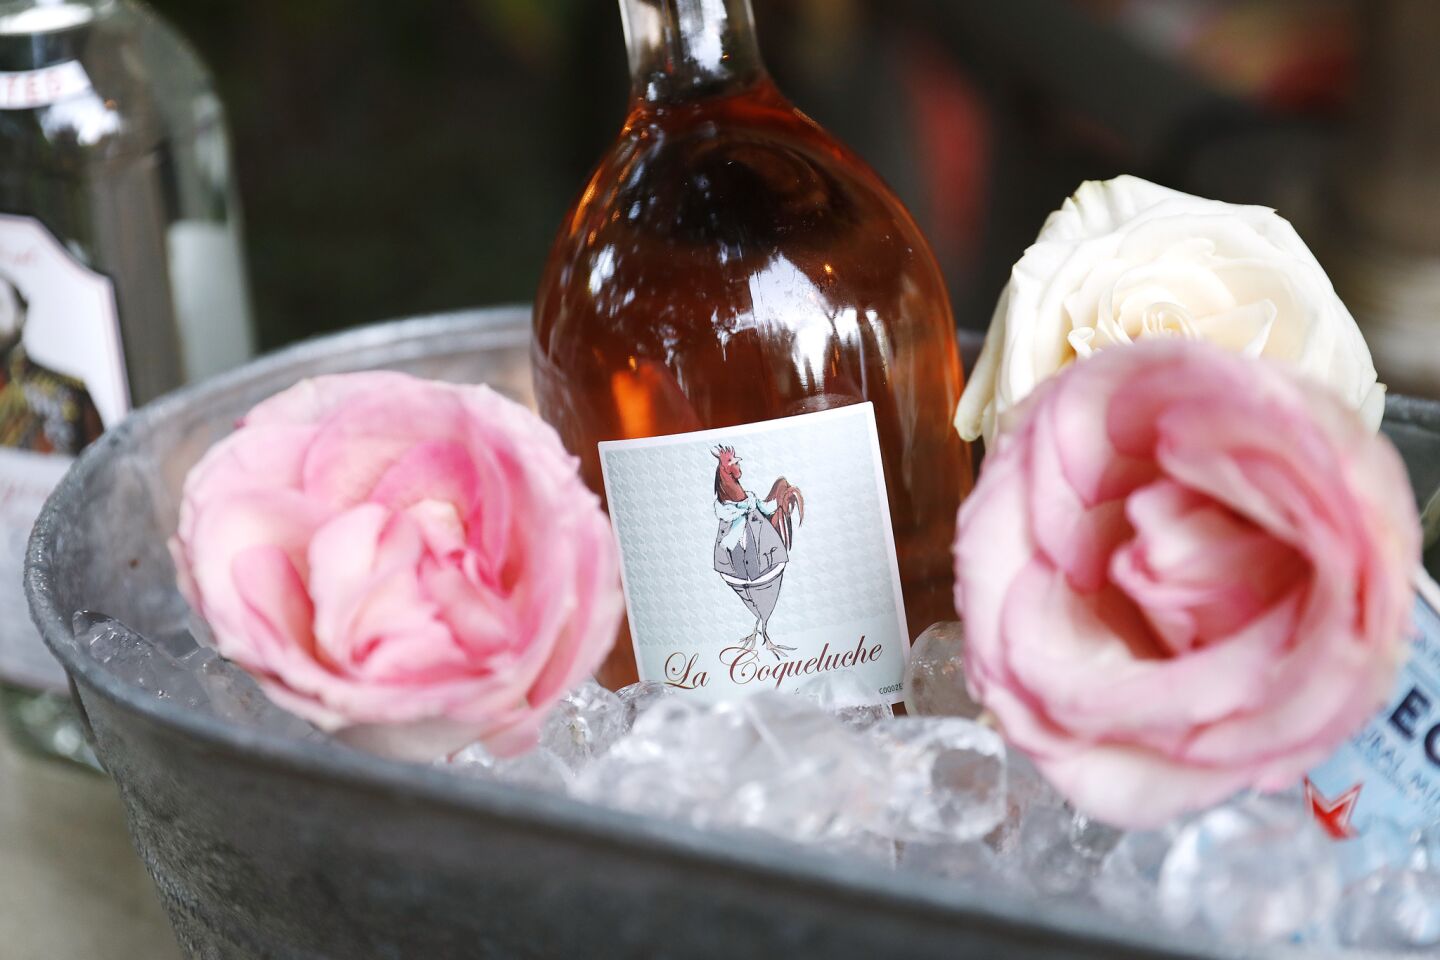 An iced rosé is the perfect accompaniment.